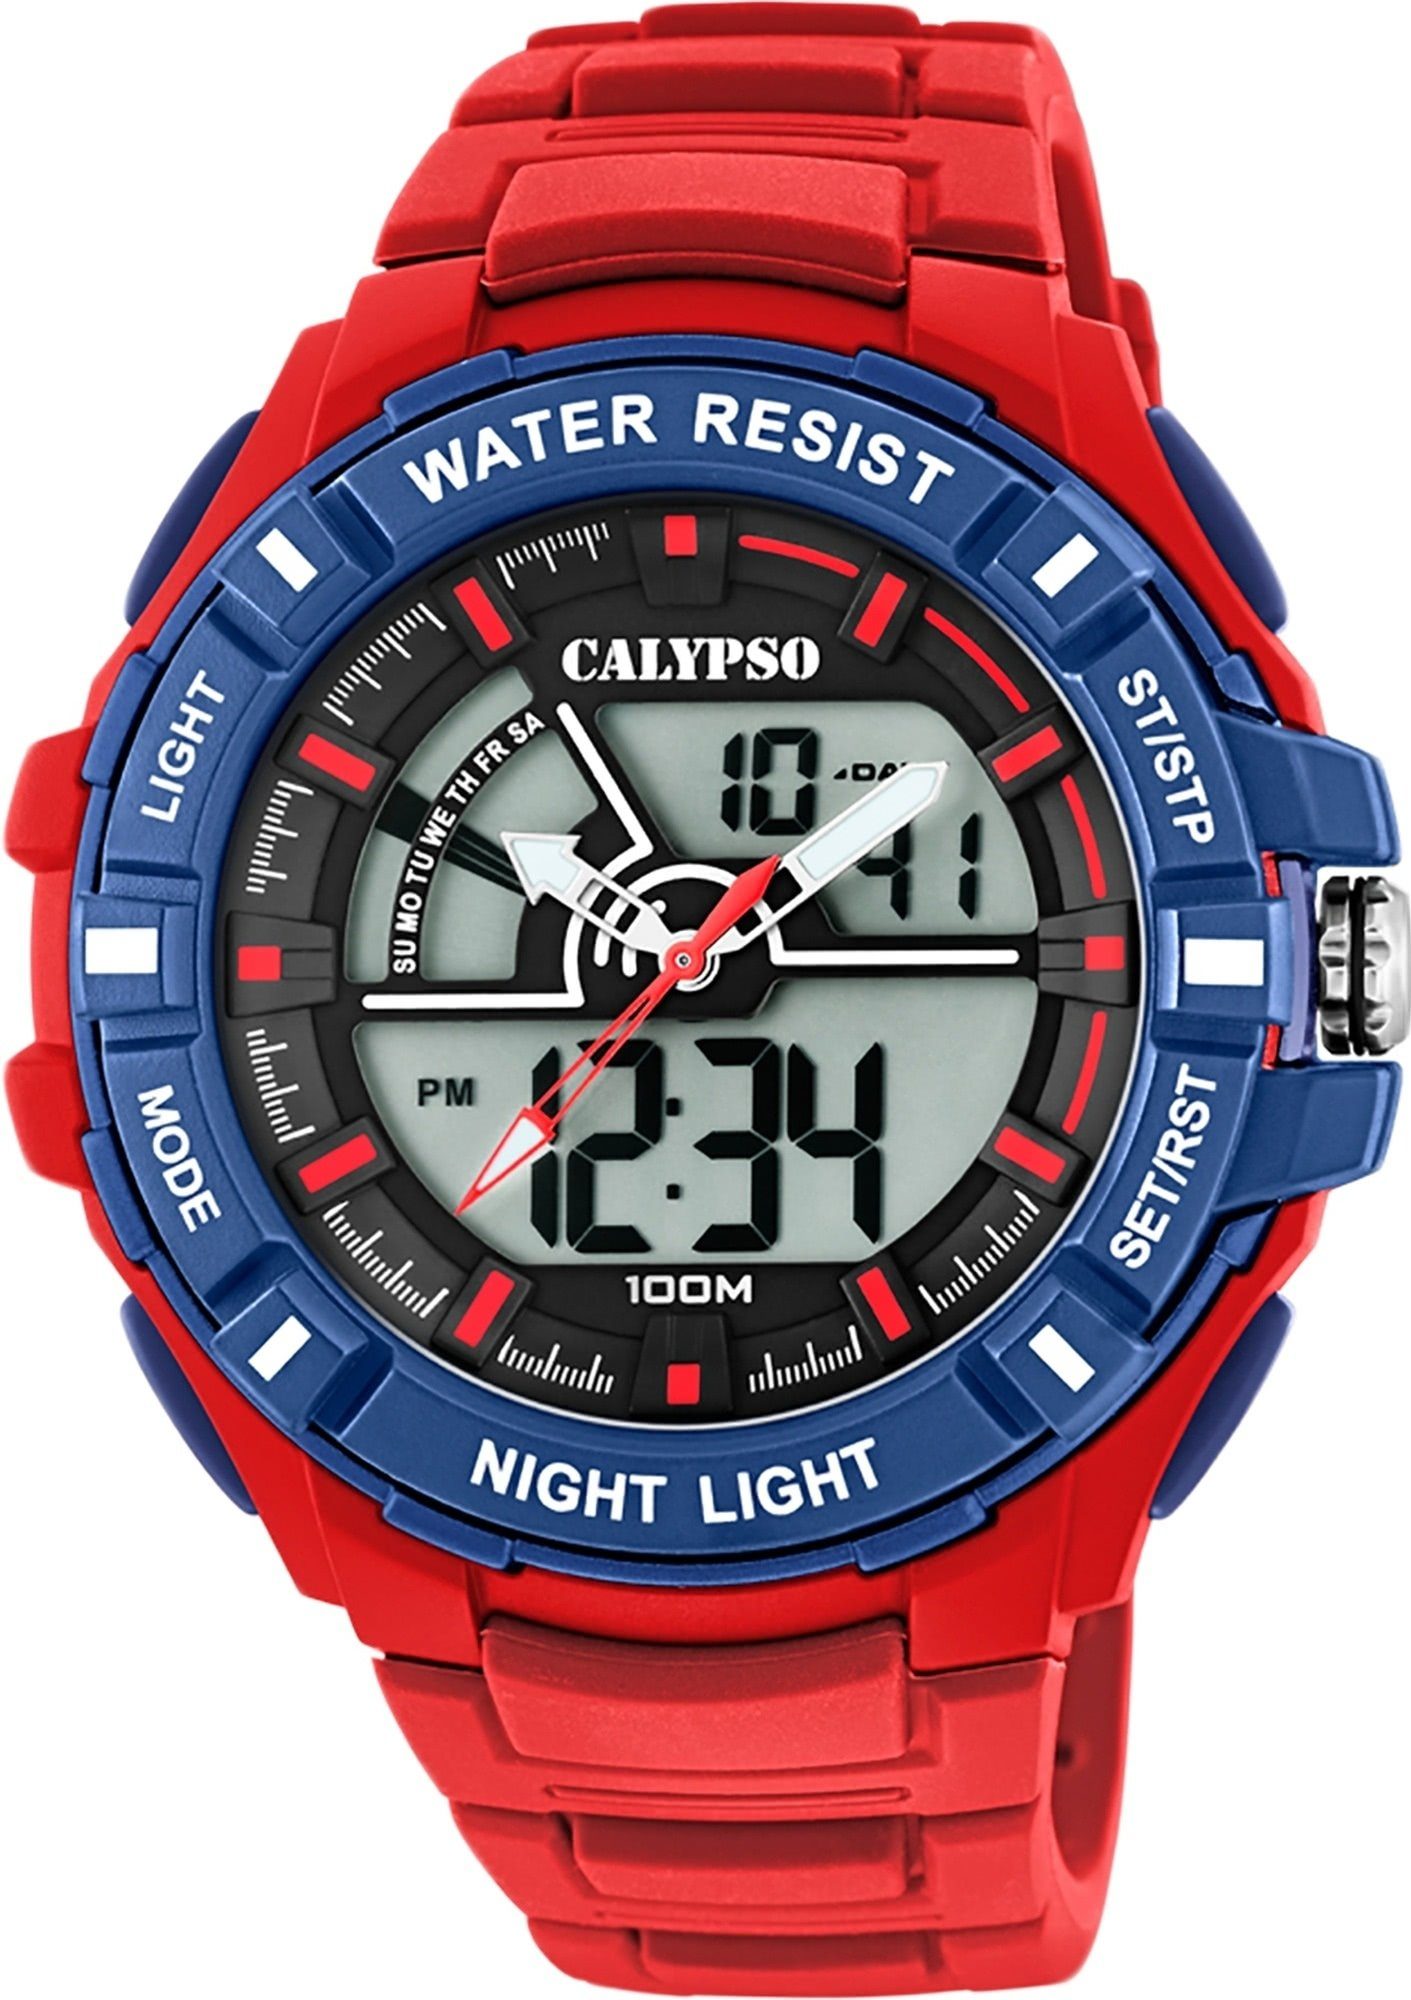 CALYPSO K5769/3, rund, Herren Sport Armbanduhr PUarmband Herren Uhr Digitaluhr Calypso WATCHES Kunststoff, rot,